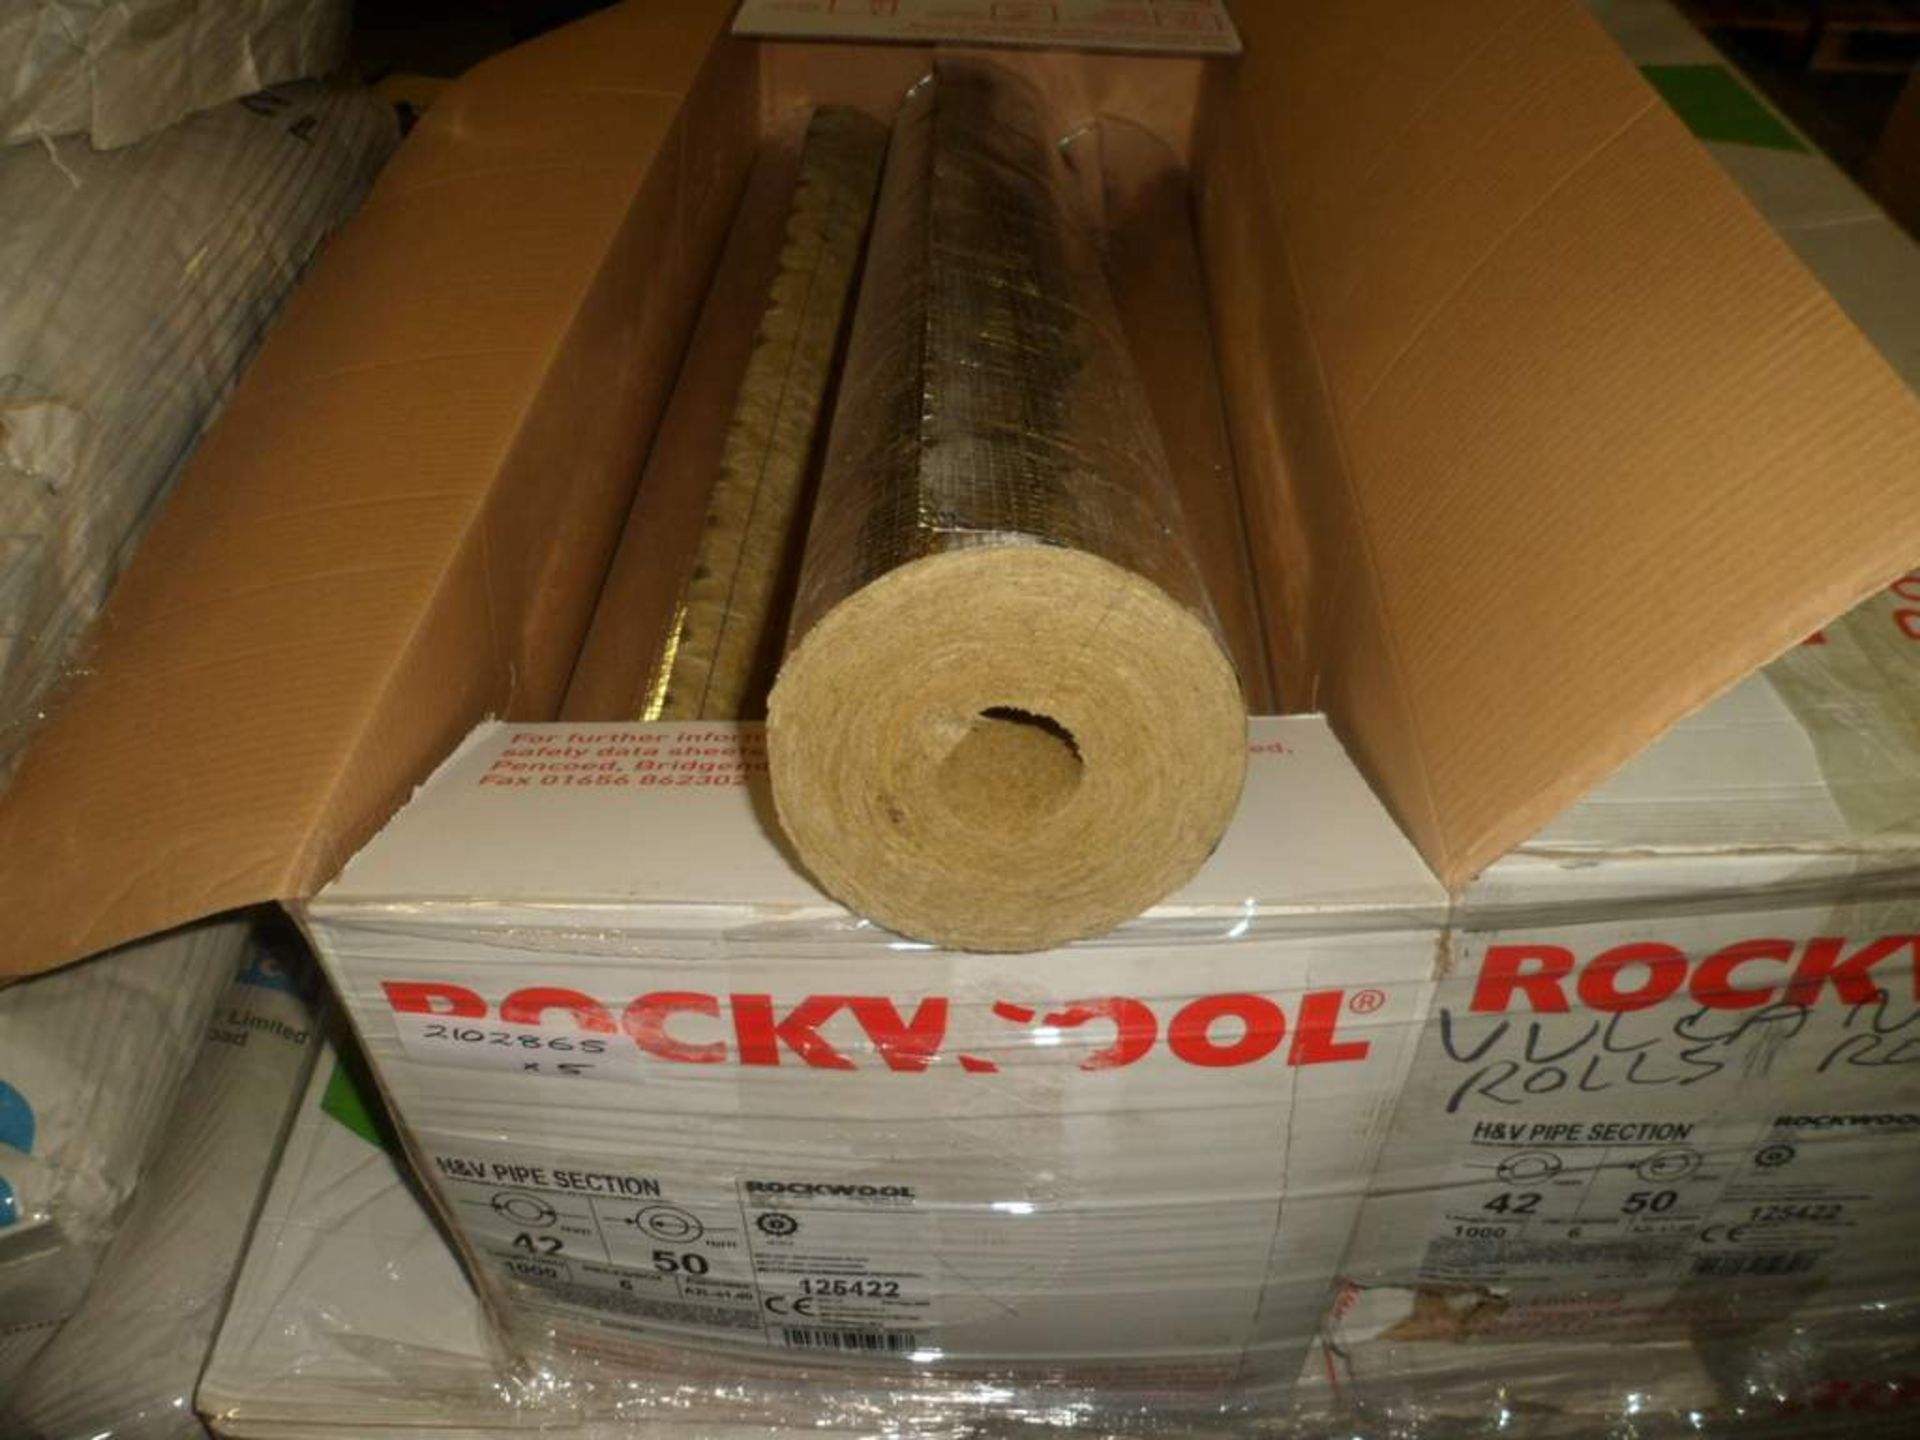 5x Boxes of Rockwool - Model:PROROX PS971 ALU - 6 per box - Image 2 of 3